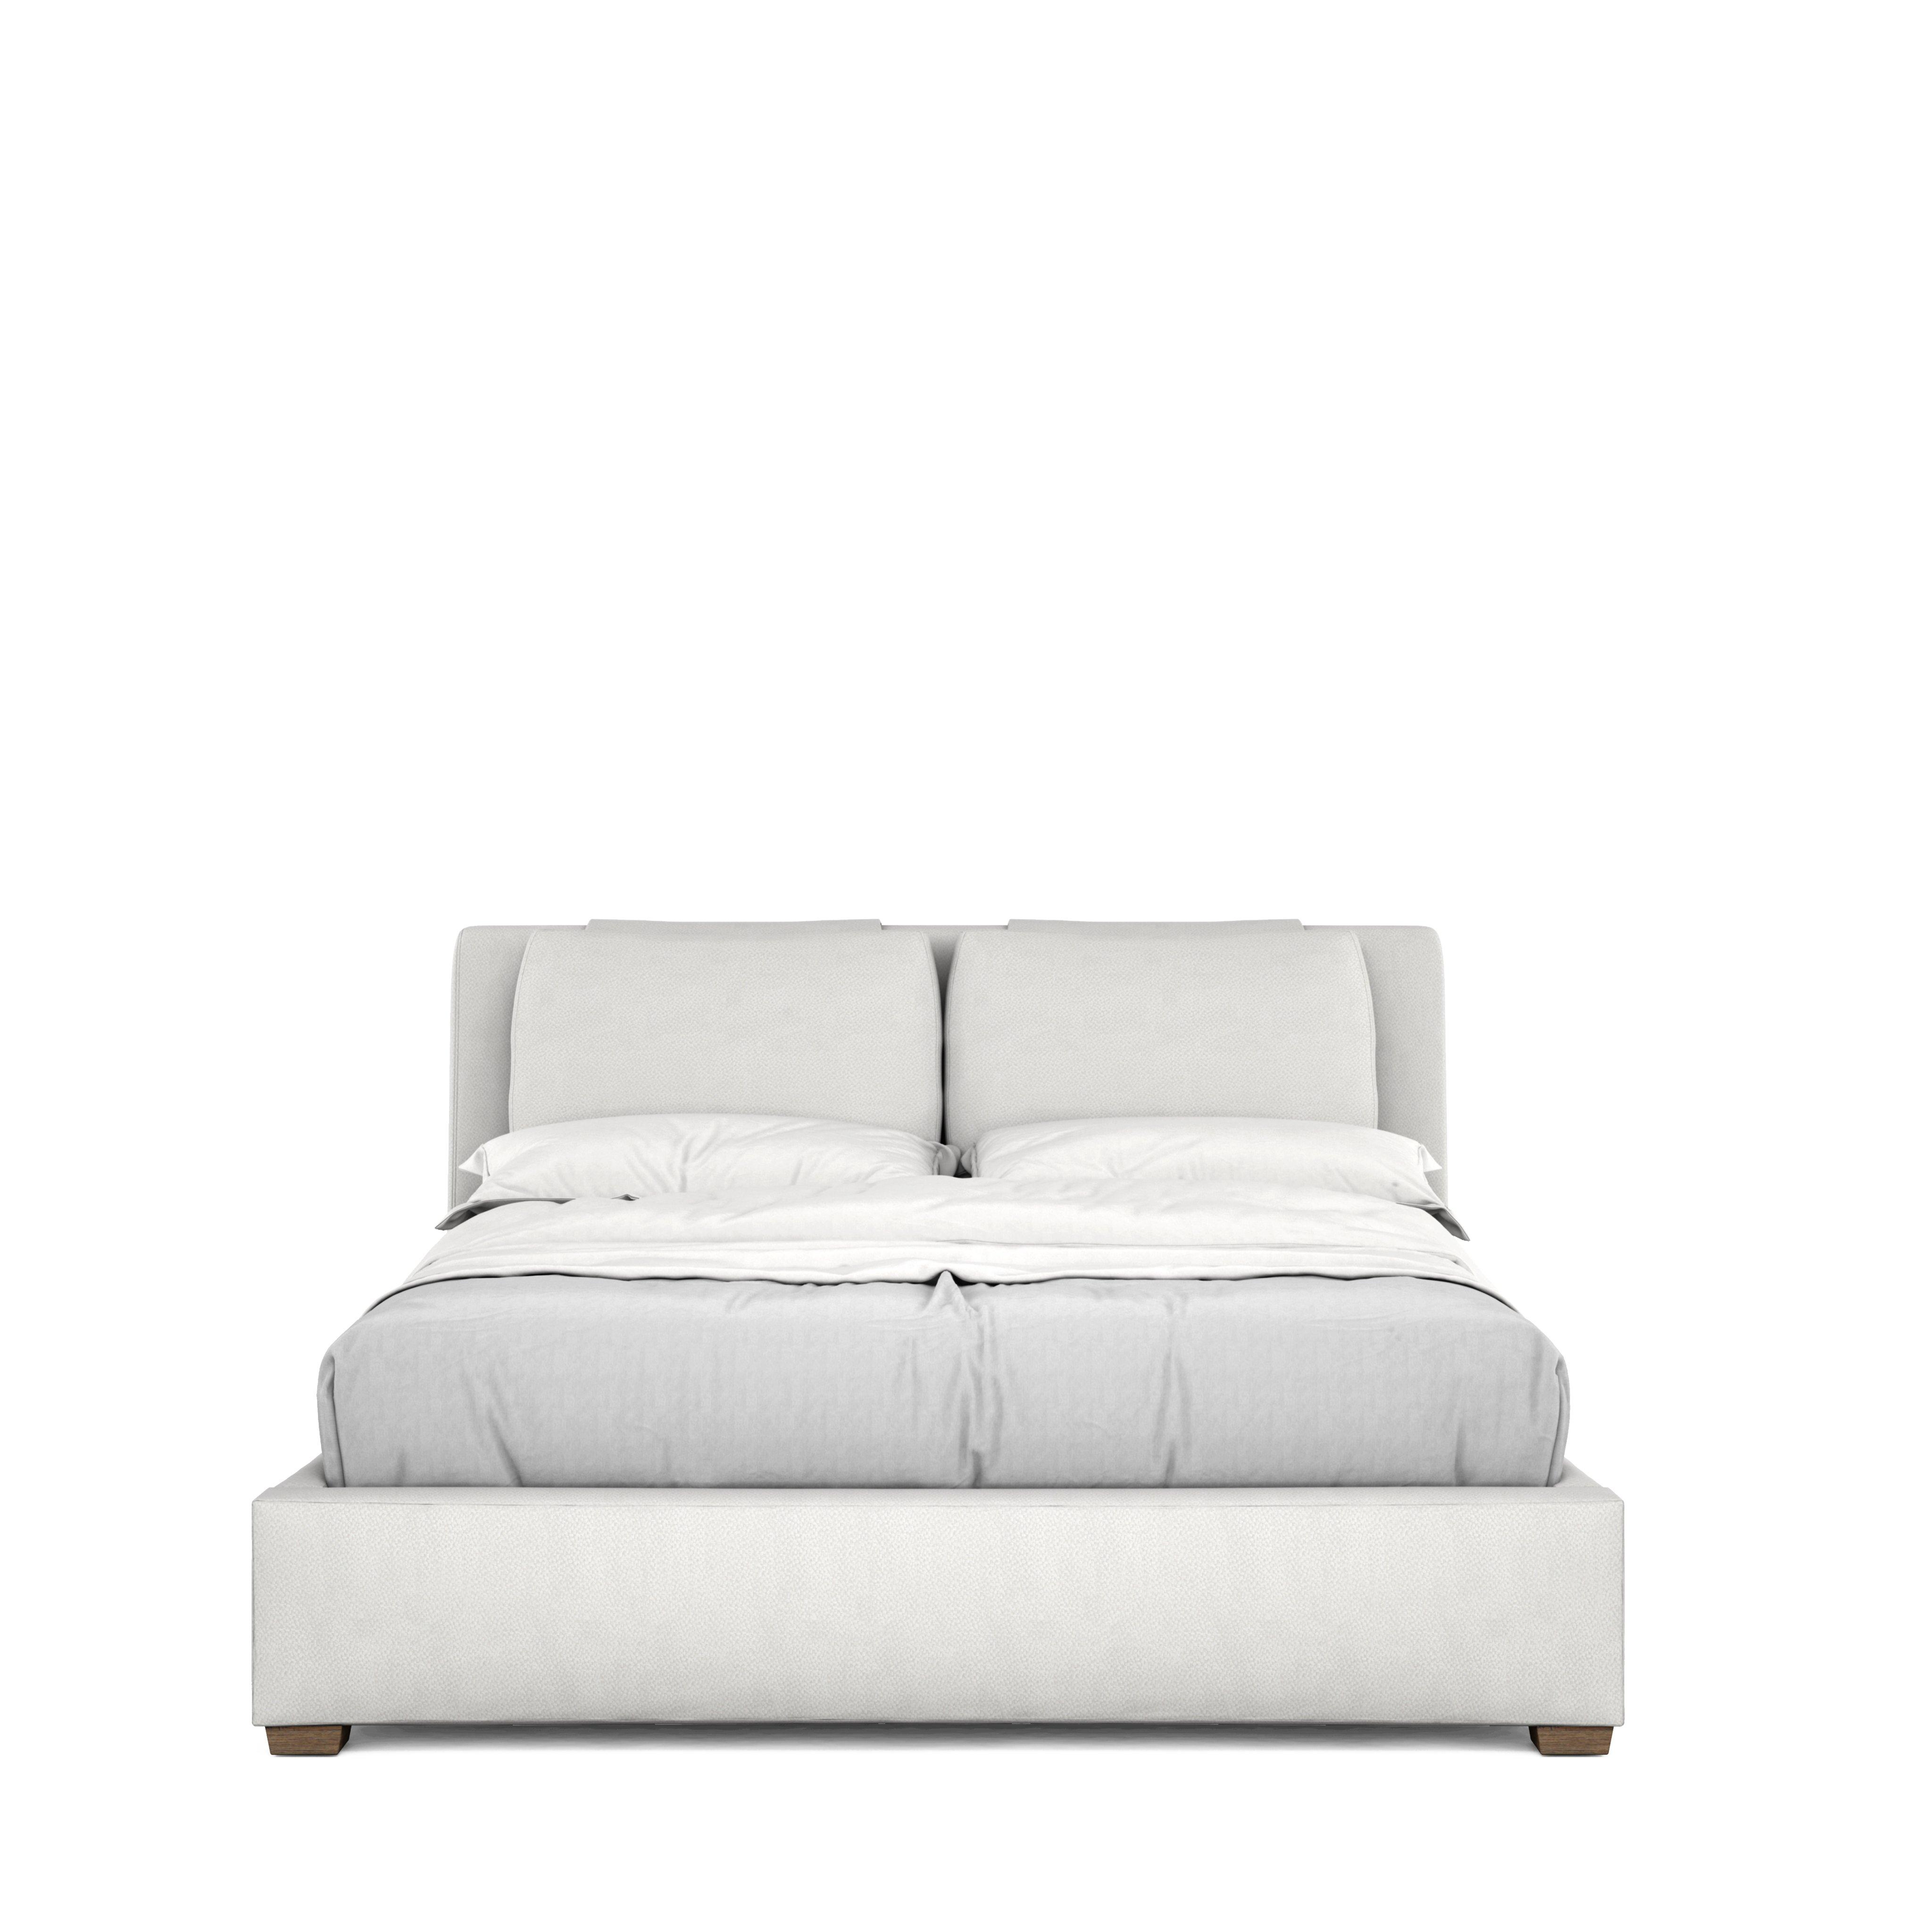 Modern, Transitional Platform Bed Stockyard 284127-2303 in Light Gray, White Fabric